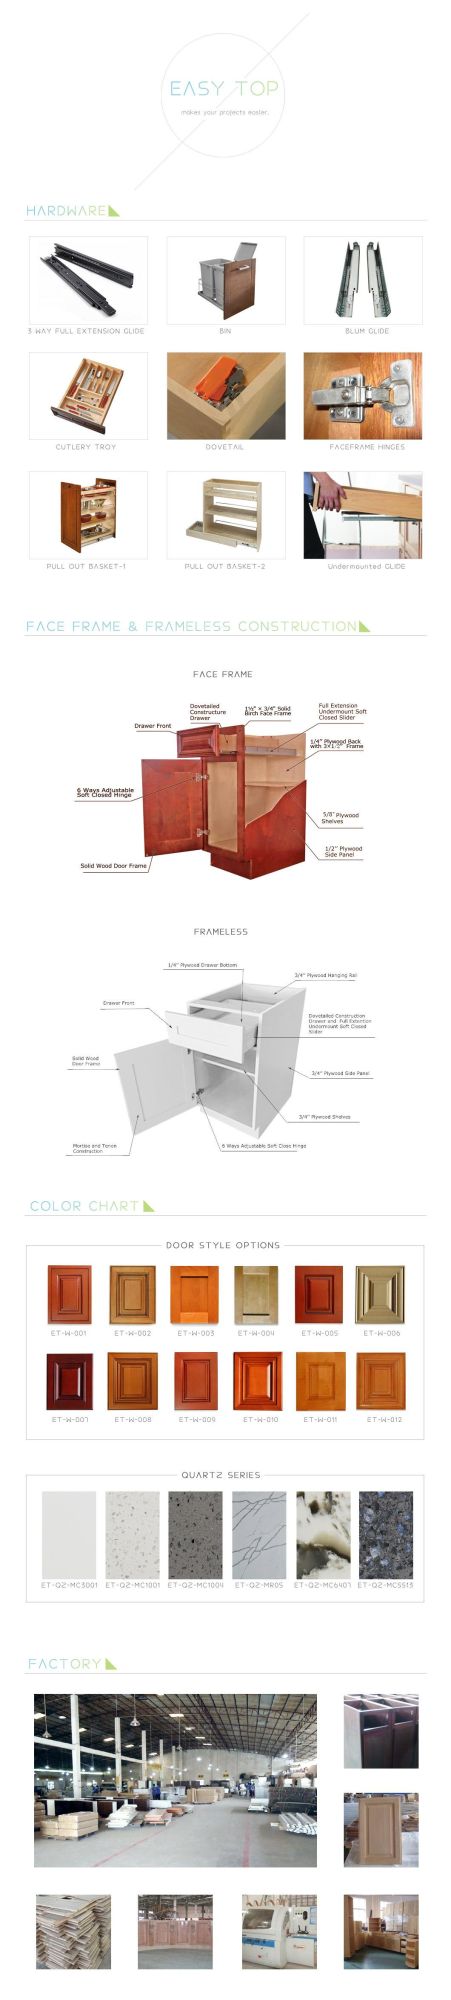 Project Modern Design Solid Wood Shaker Style Vanity Bathroom Cabinet